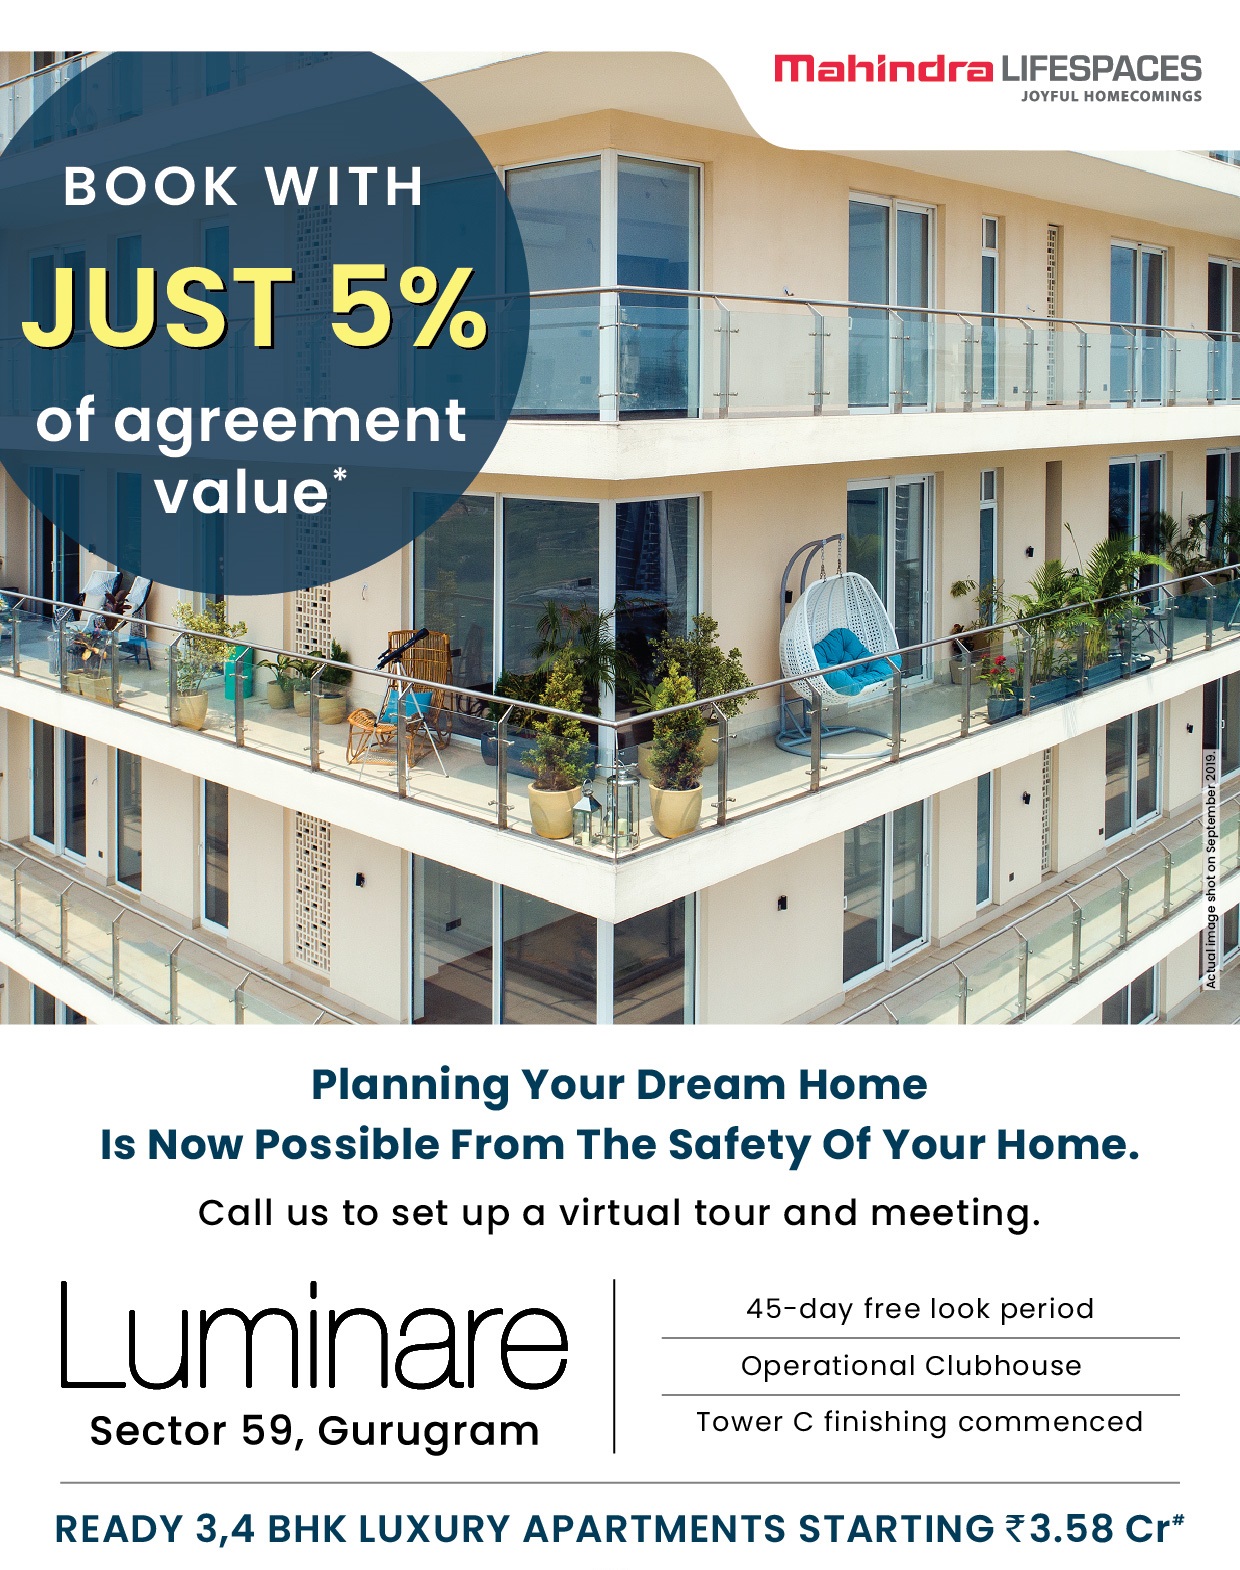 Book with just 5% of agreement value at Mahindra Luminare, Gurgaon